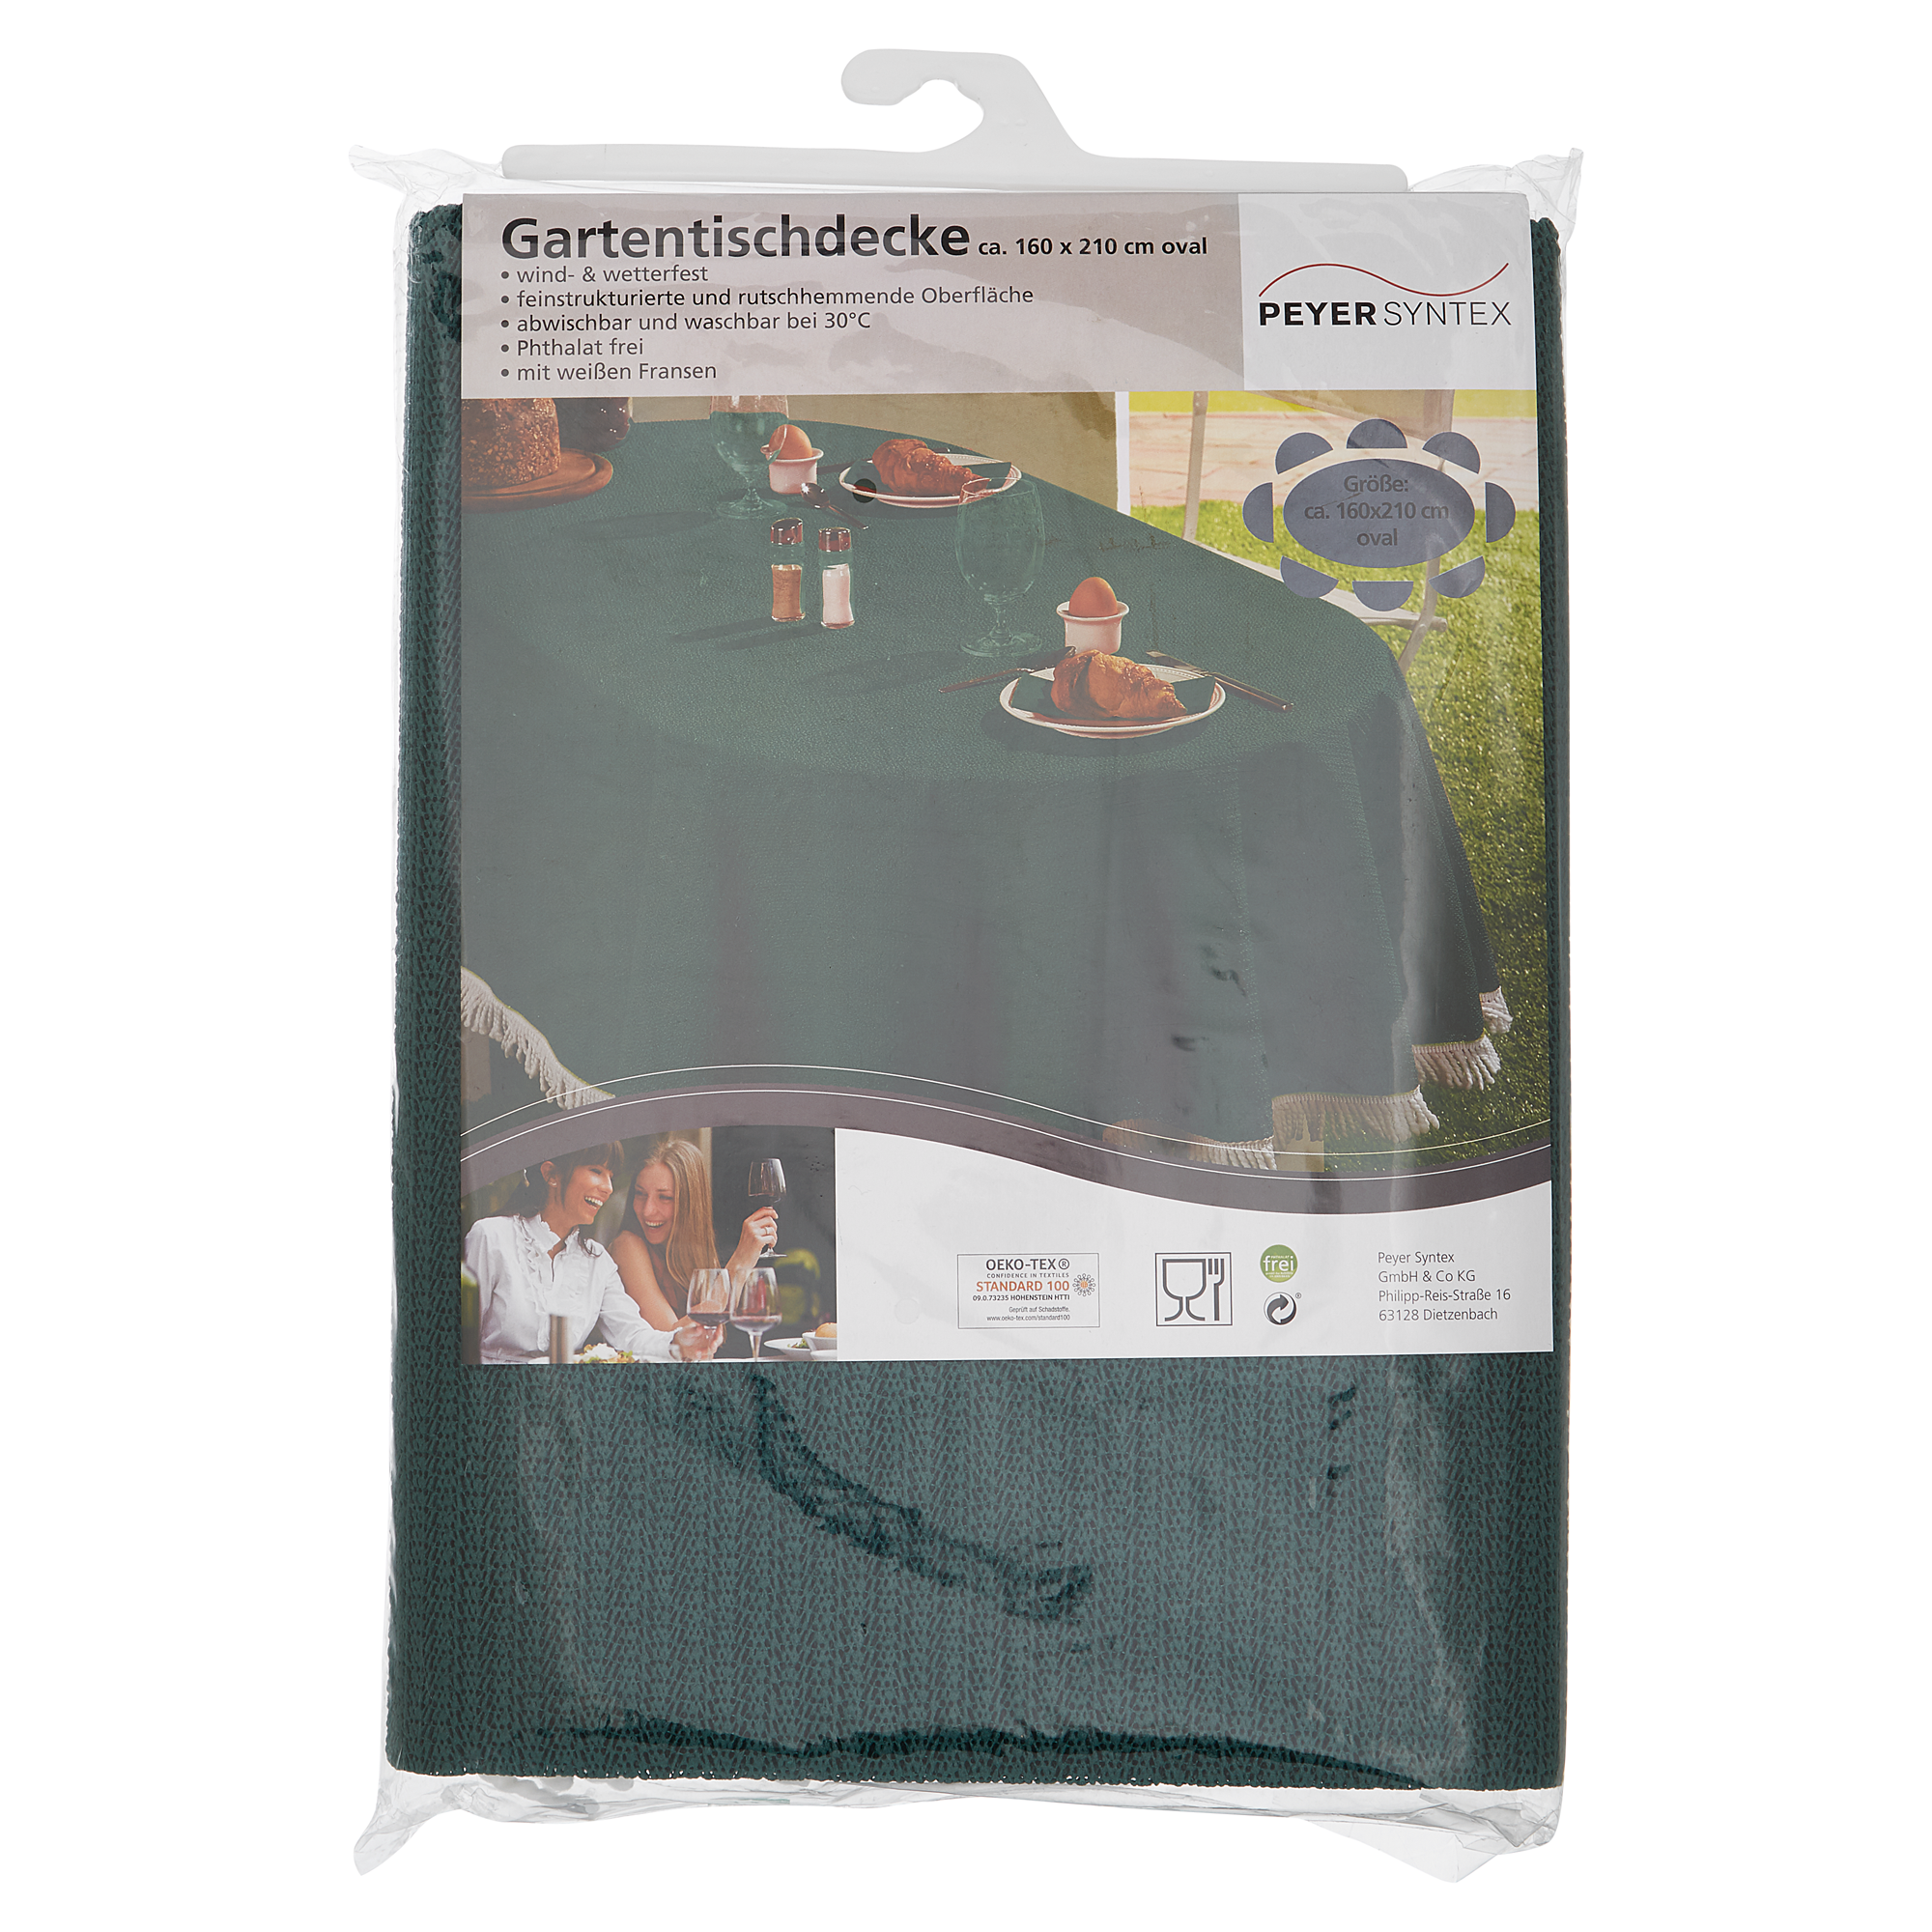 Gartentischdecke PVC oval dunkelgrün 160 x 210 cm + product picture